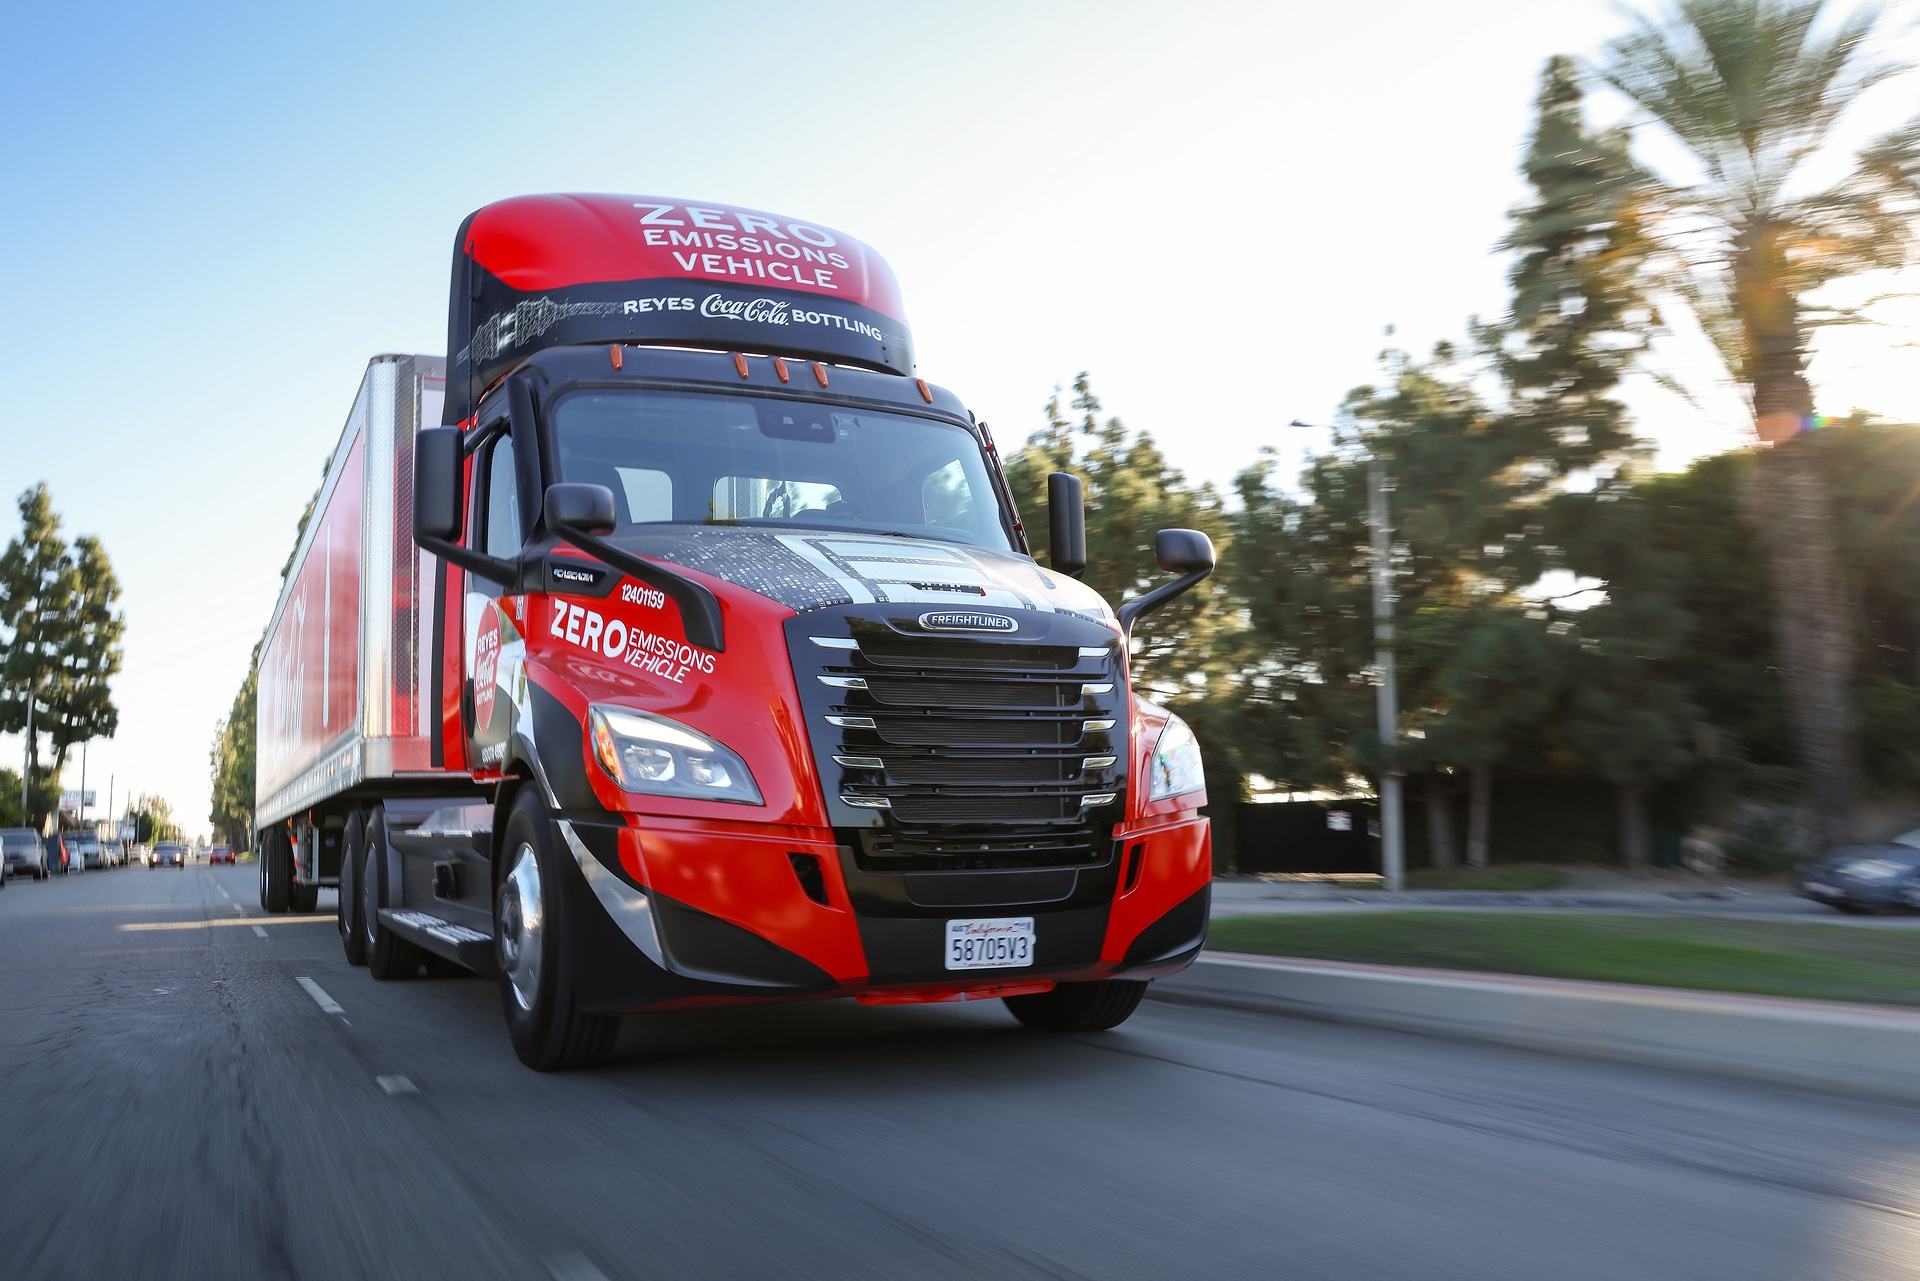 Daimler Truck: 20 battery electric Freightliner eCascadias hit the roads for Reyes Coca-Cola Bottling